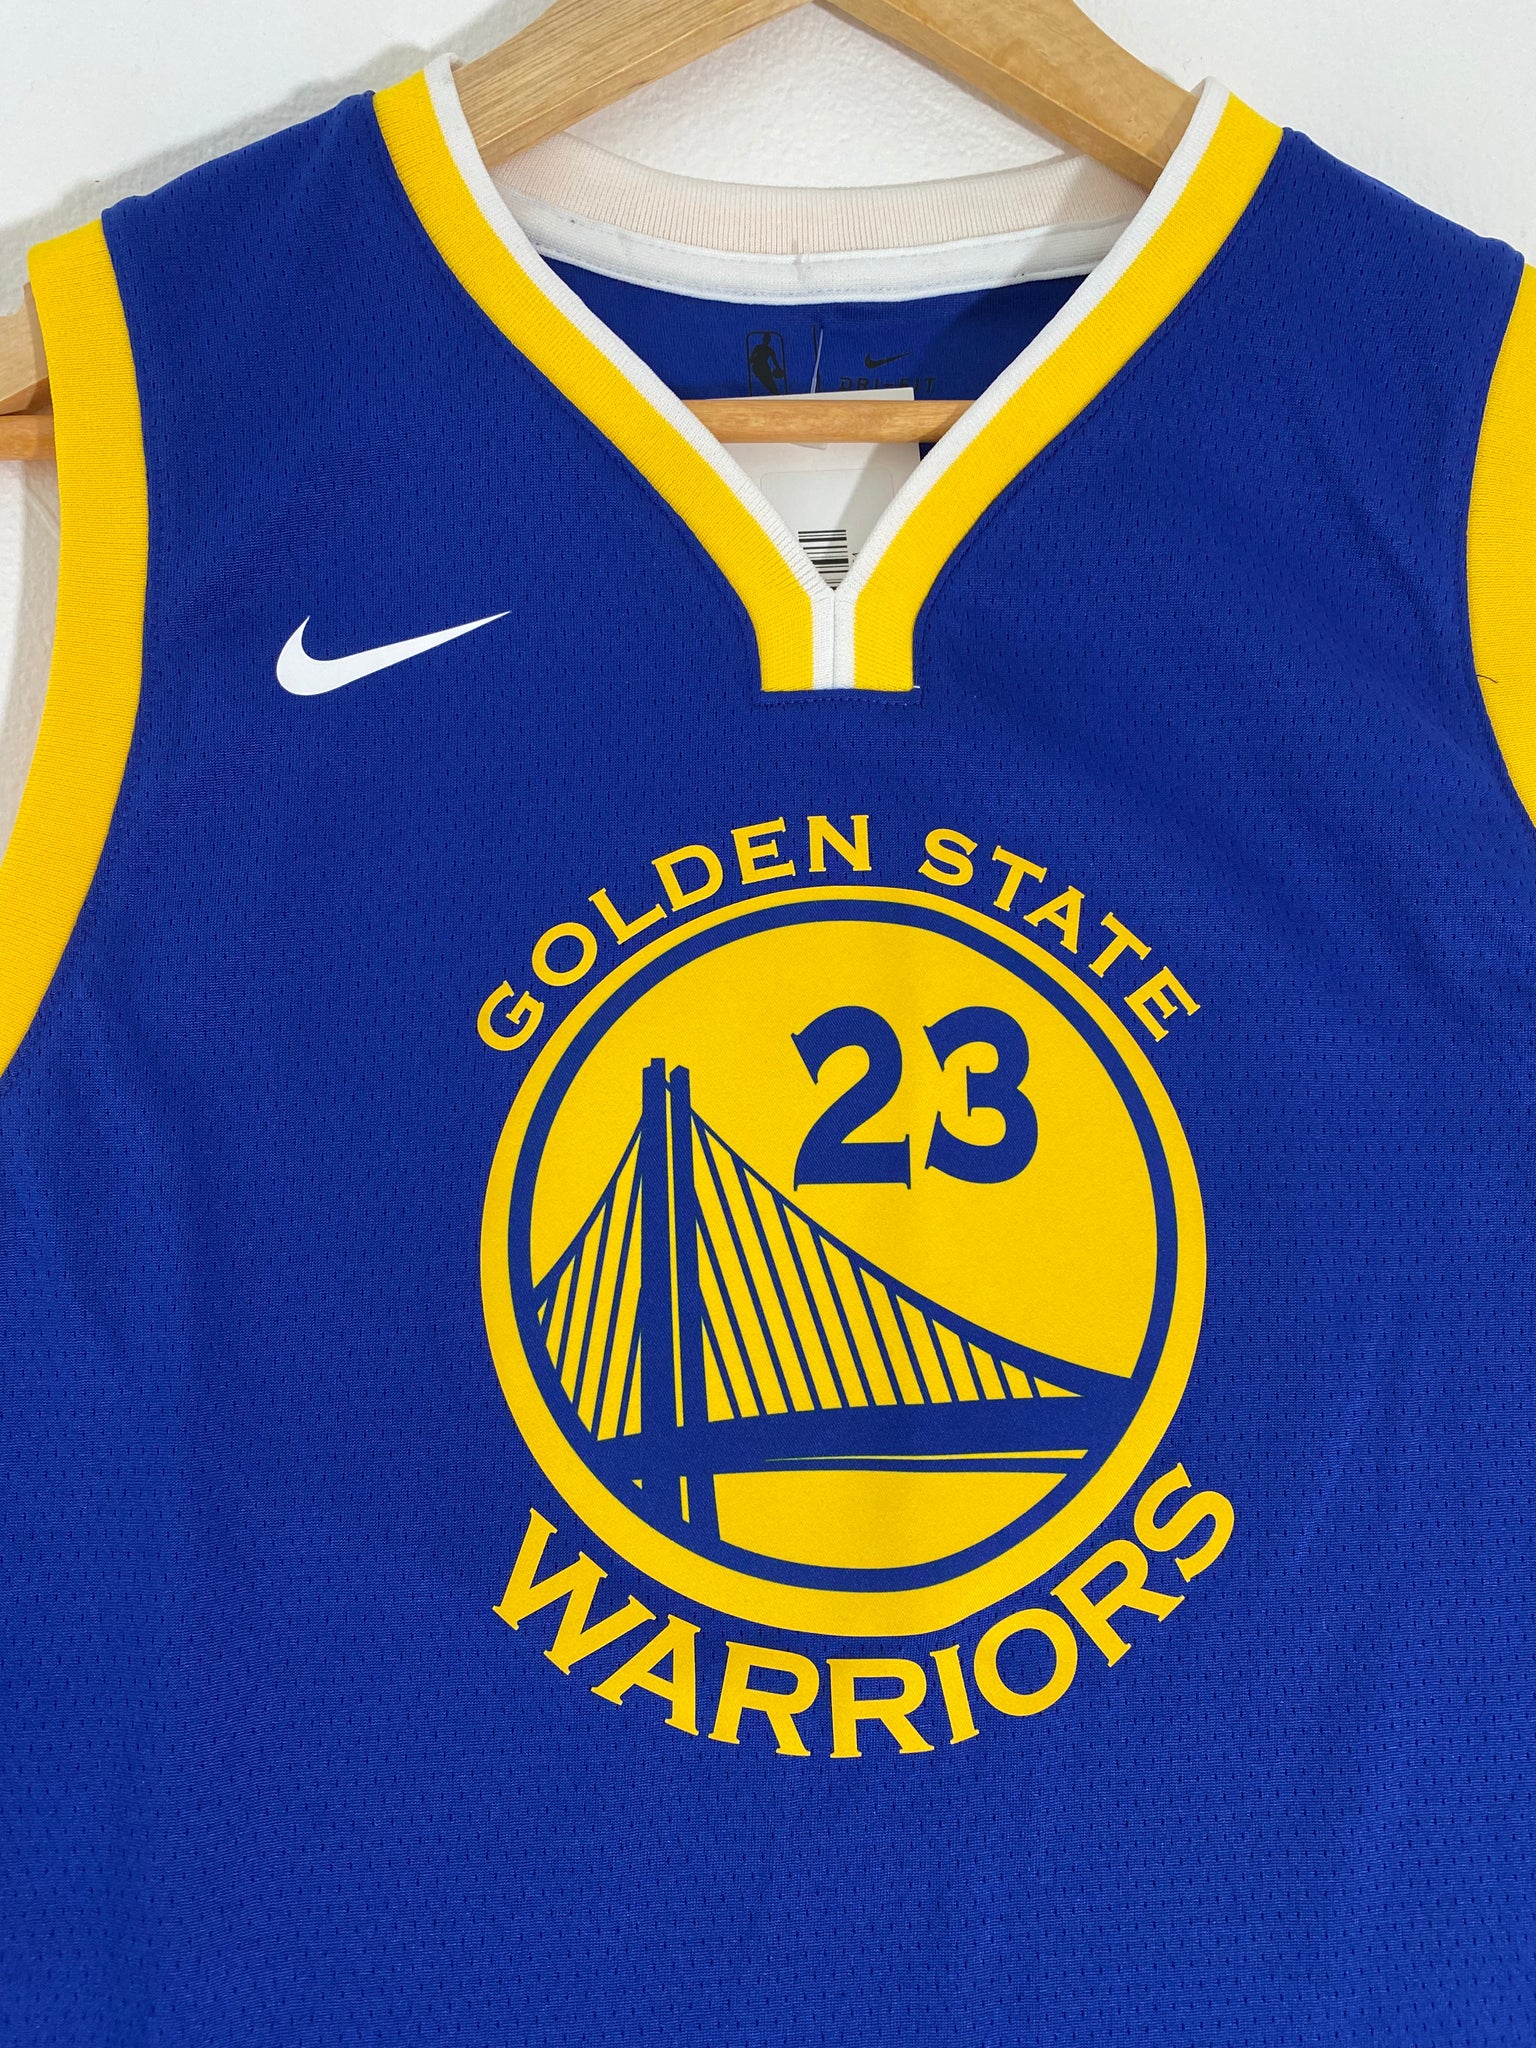 Golden State Warriors Nike Gear, Nike Warriors Store, Golden State